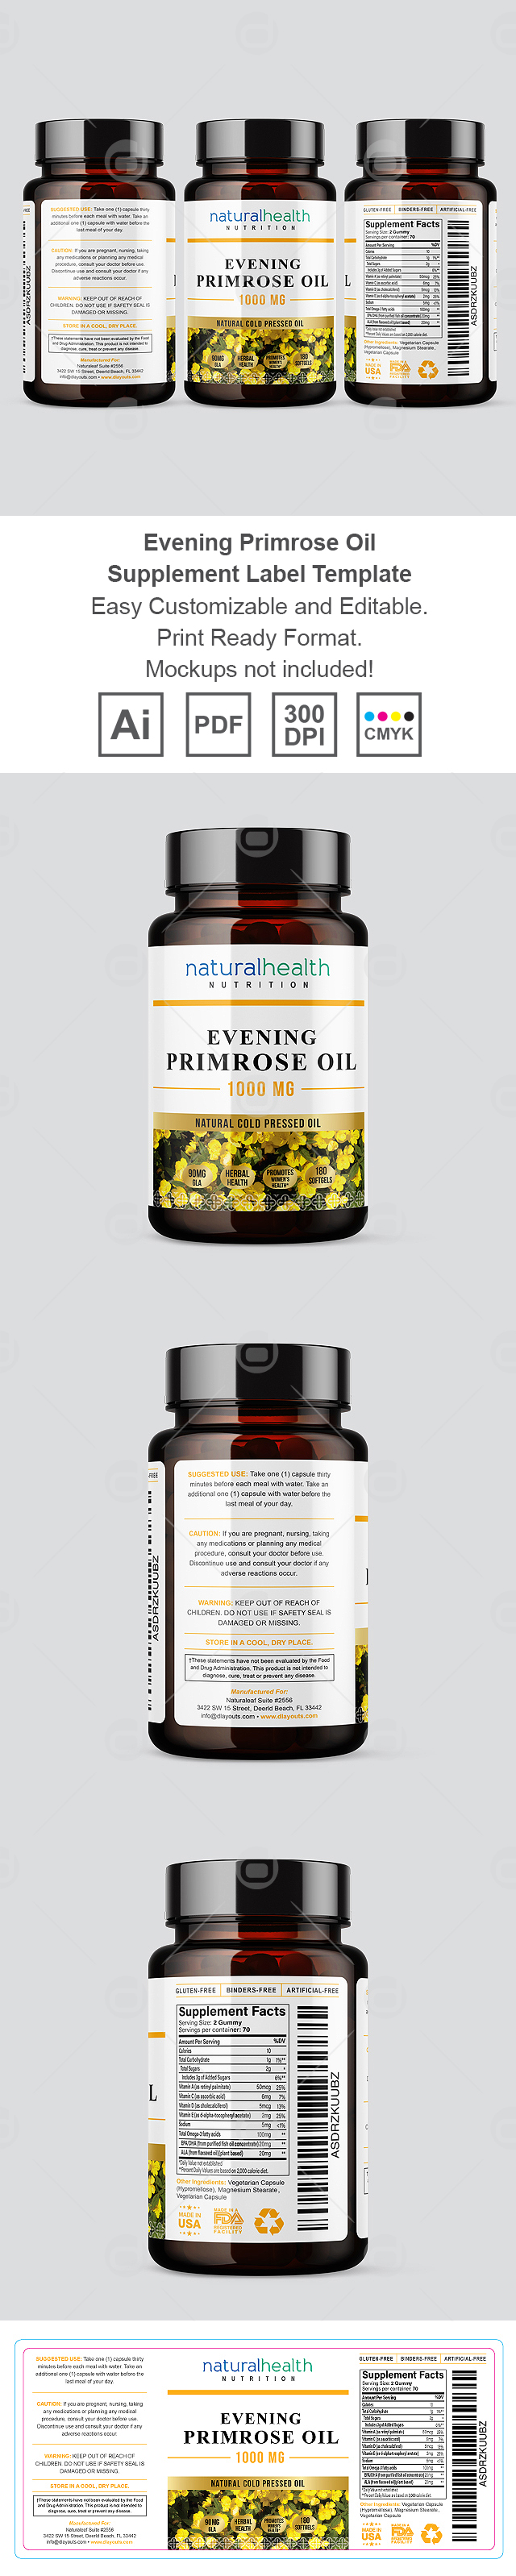 Evening Primrose Oil Supplement Label Template